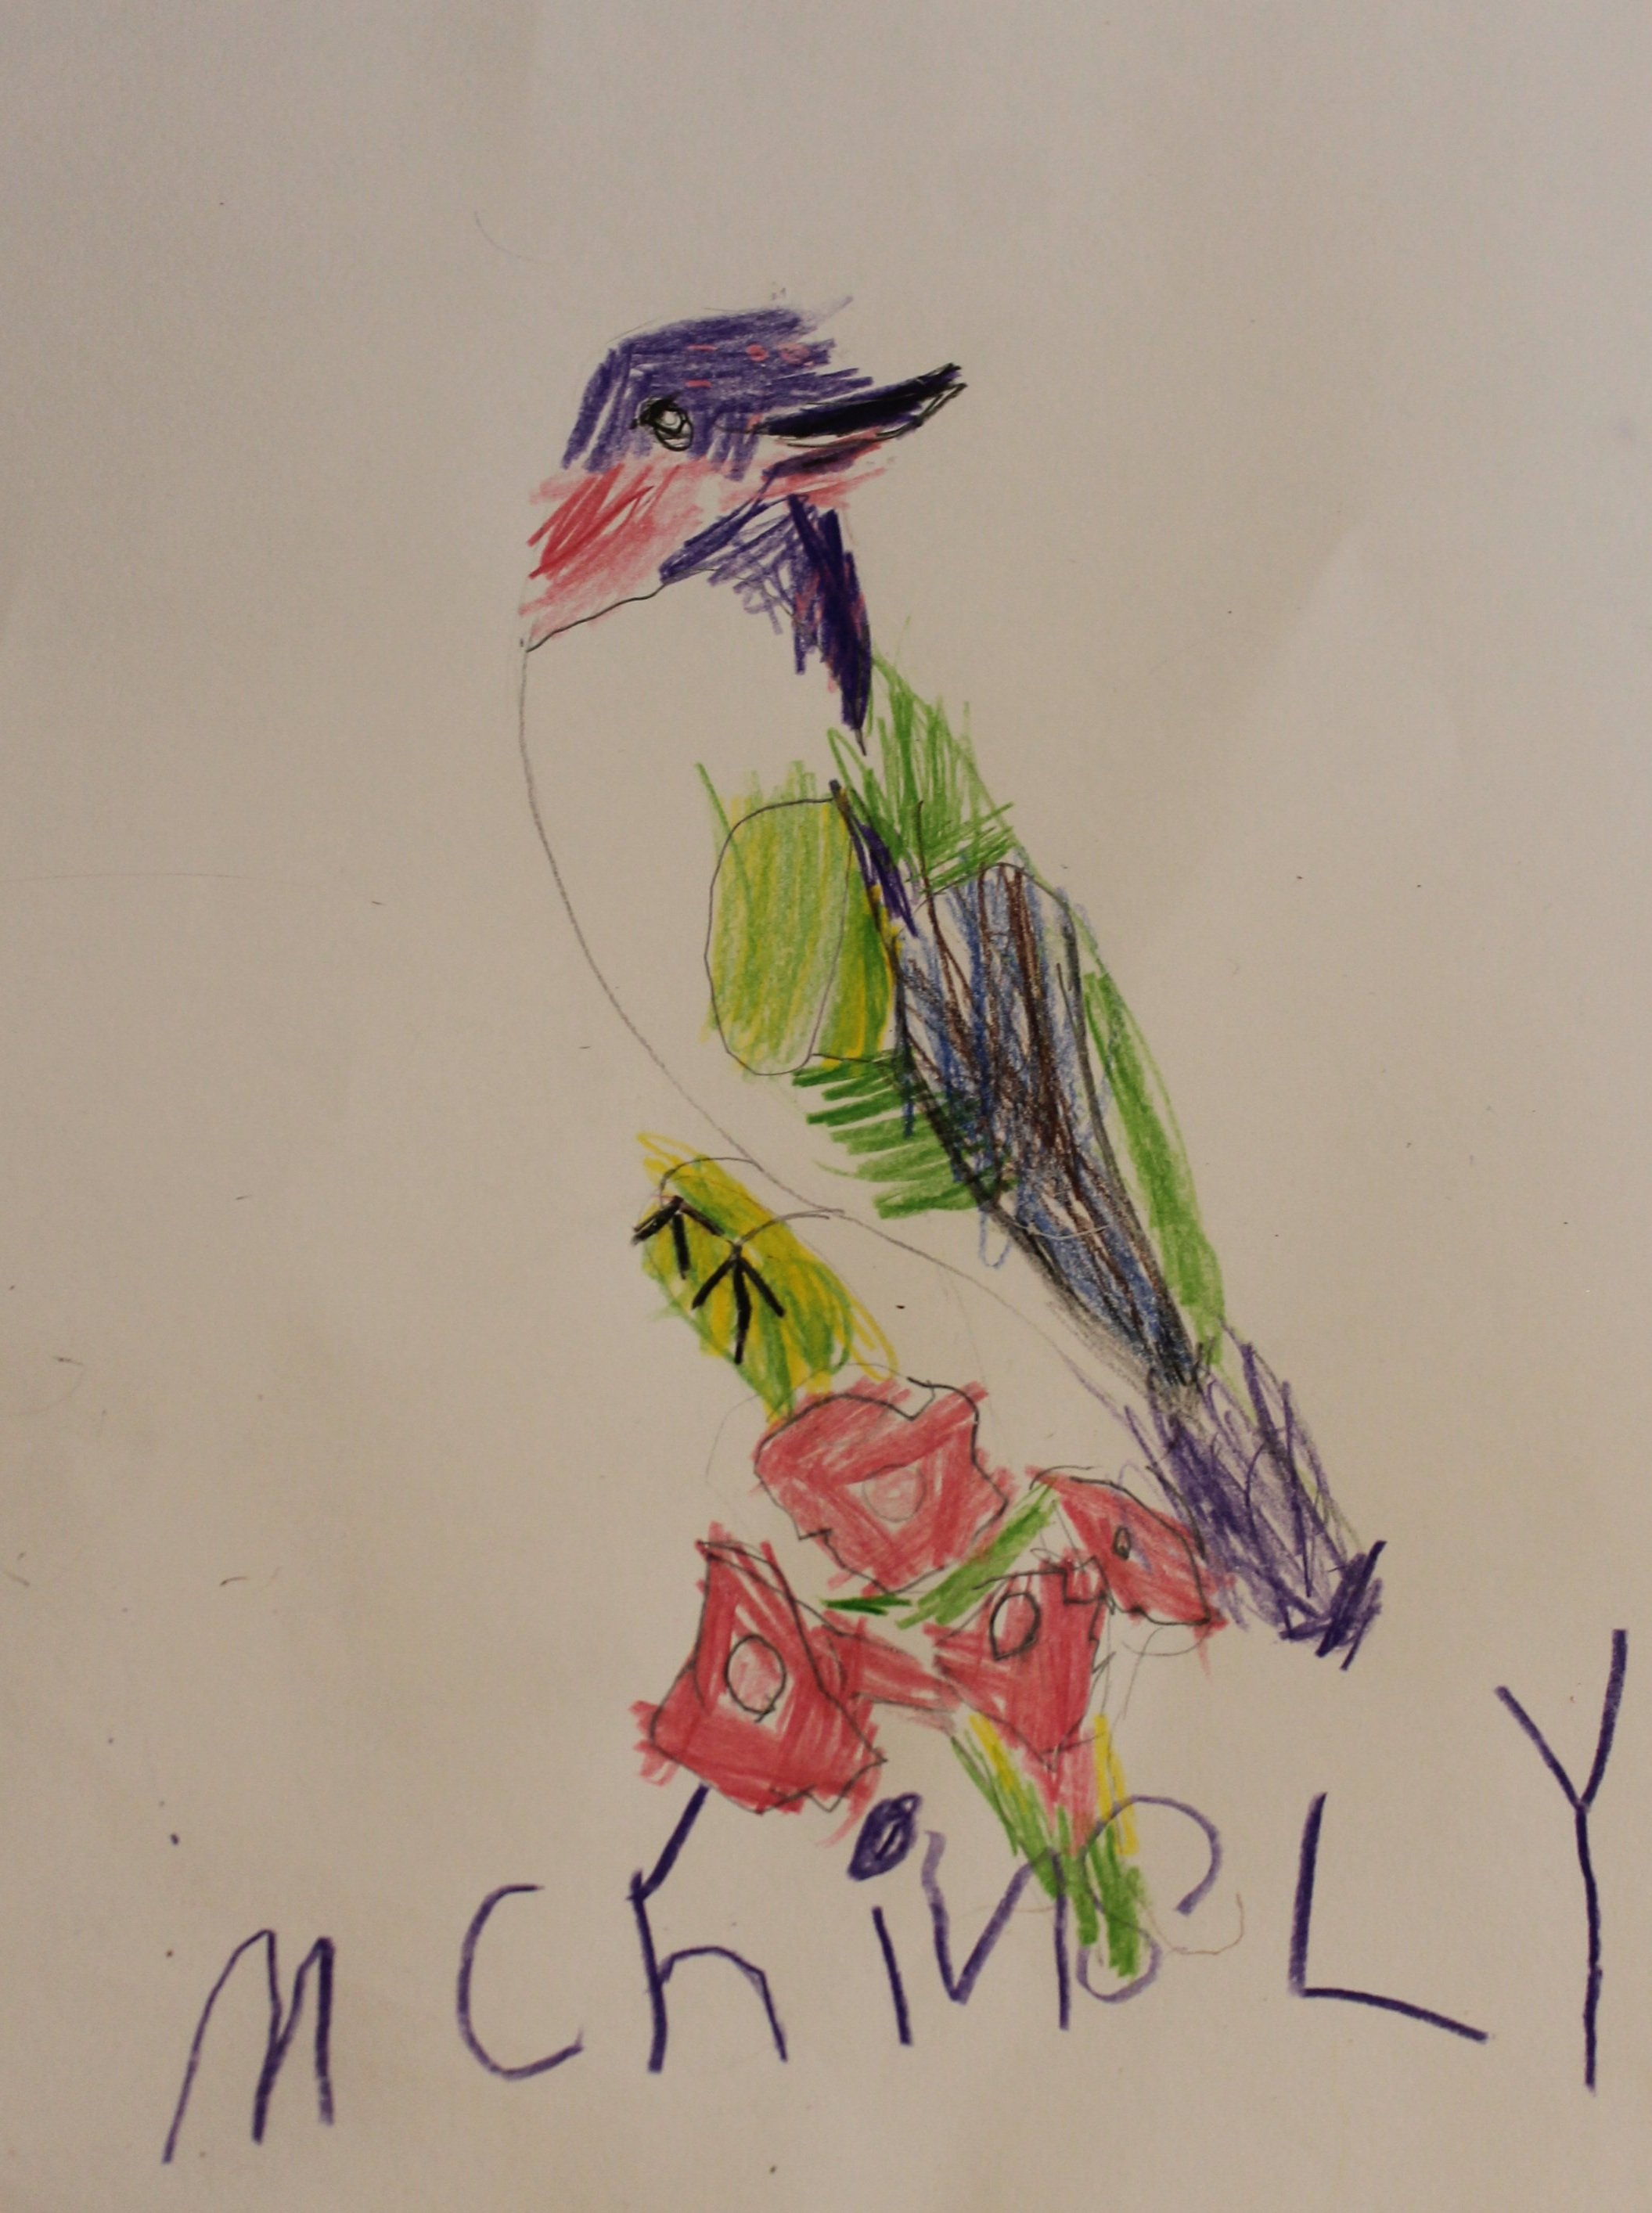 McKinsly, age 5, colored pencil